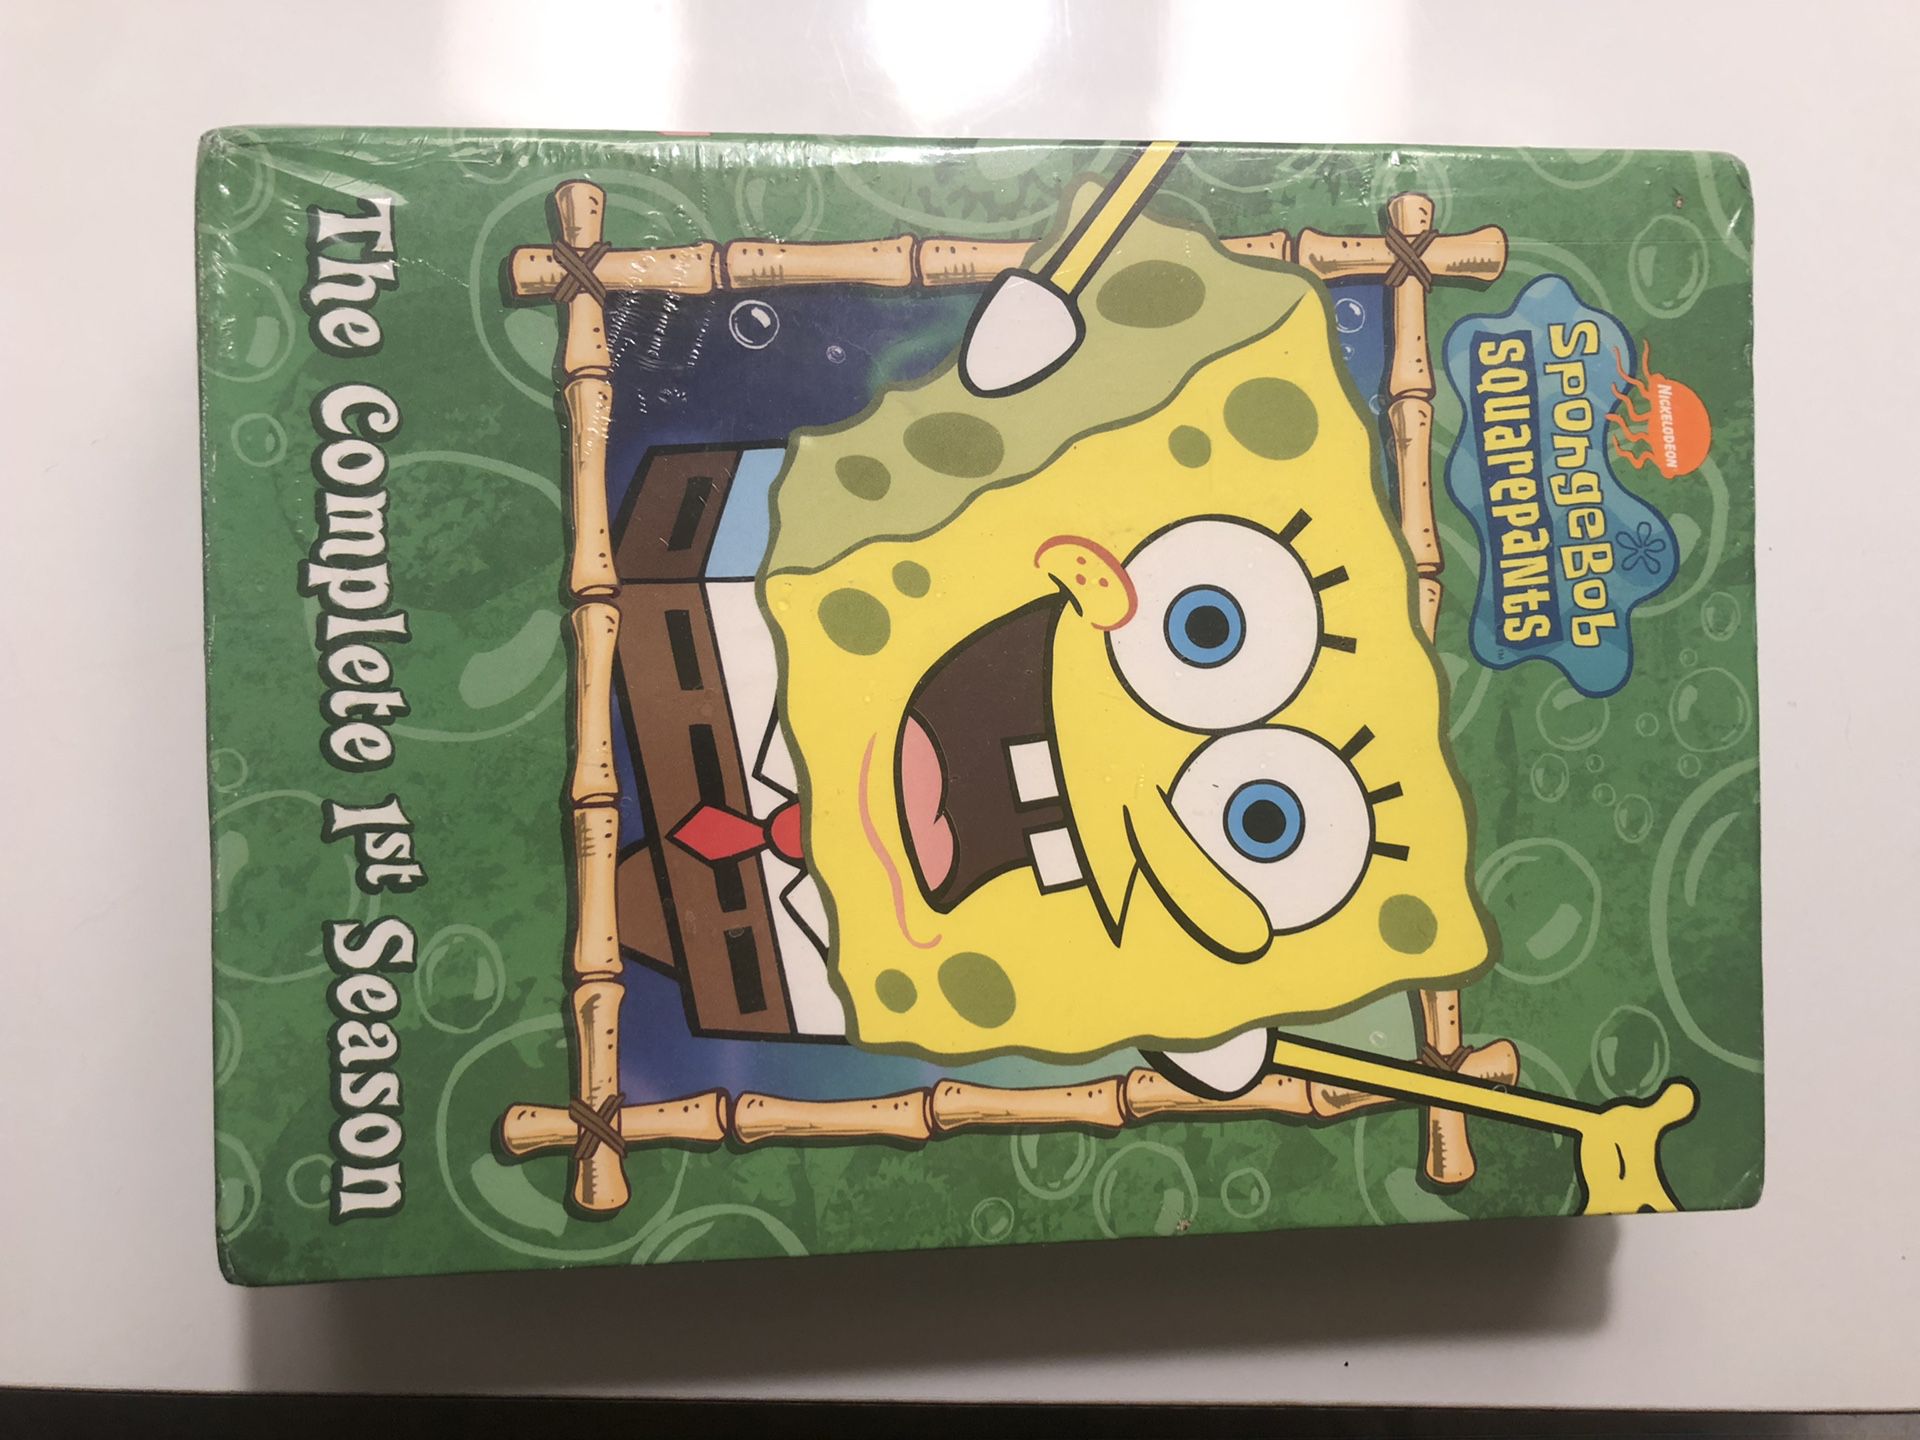 Spongebob Squarepants “The complete 1st Season”